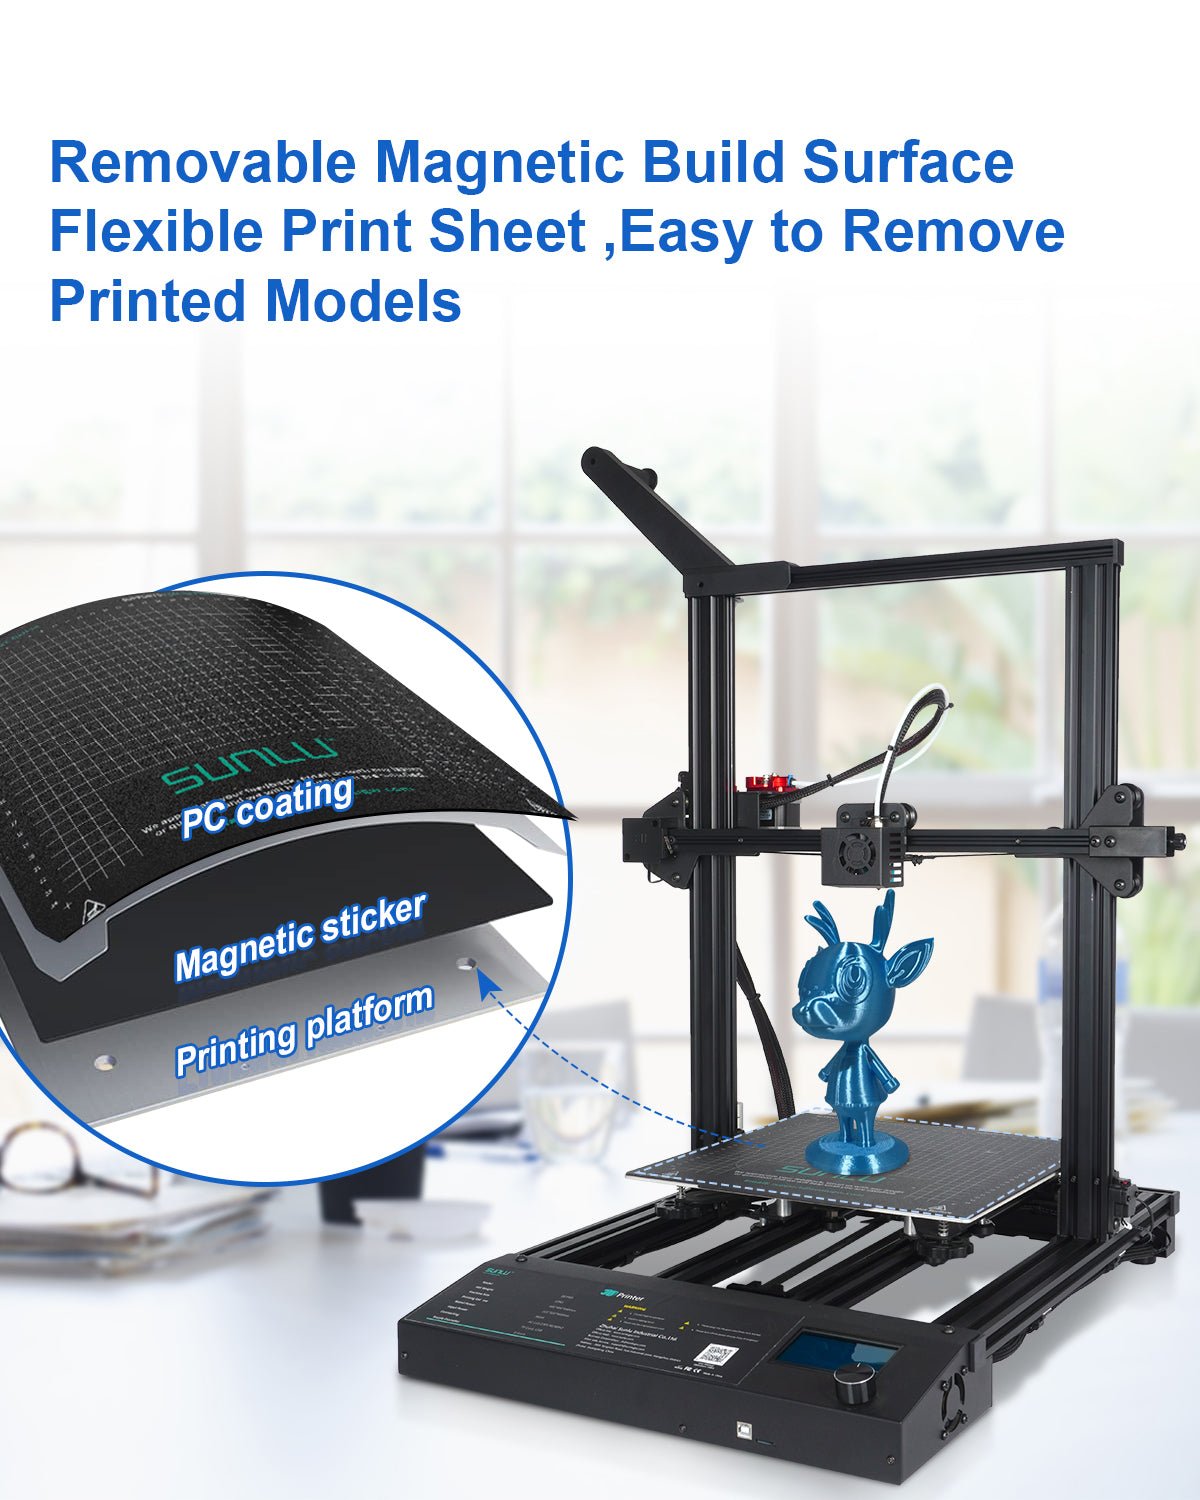 SUNLU FDM 3D Printer S8 Pro Printing Size 310x310x400mm for beginners and industrial design - SUNLU Official Online Store£üBest 3D Filament Best Selling Supplier & Manufacturer